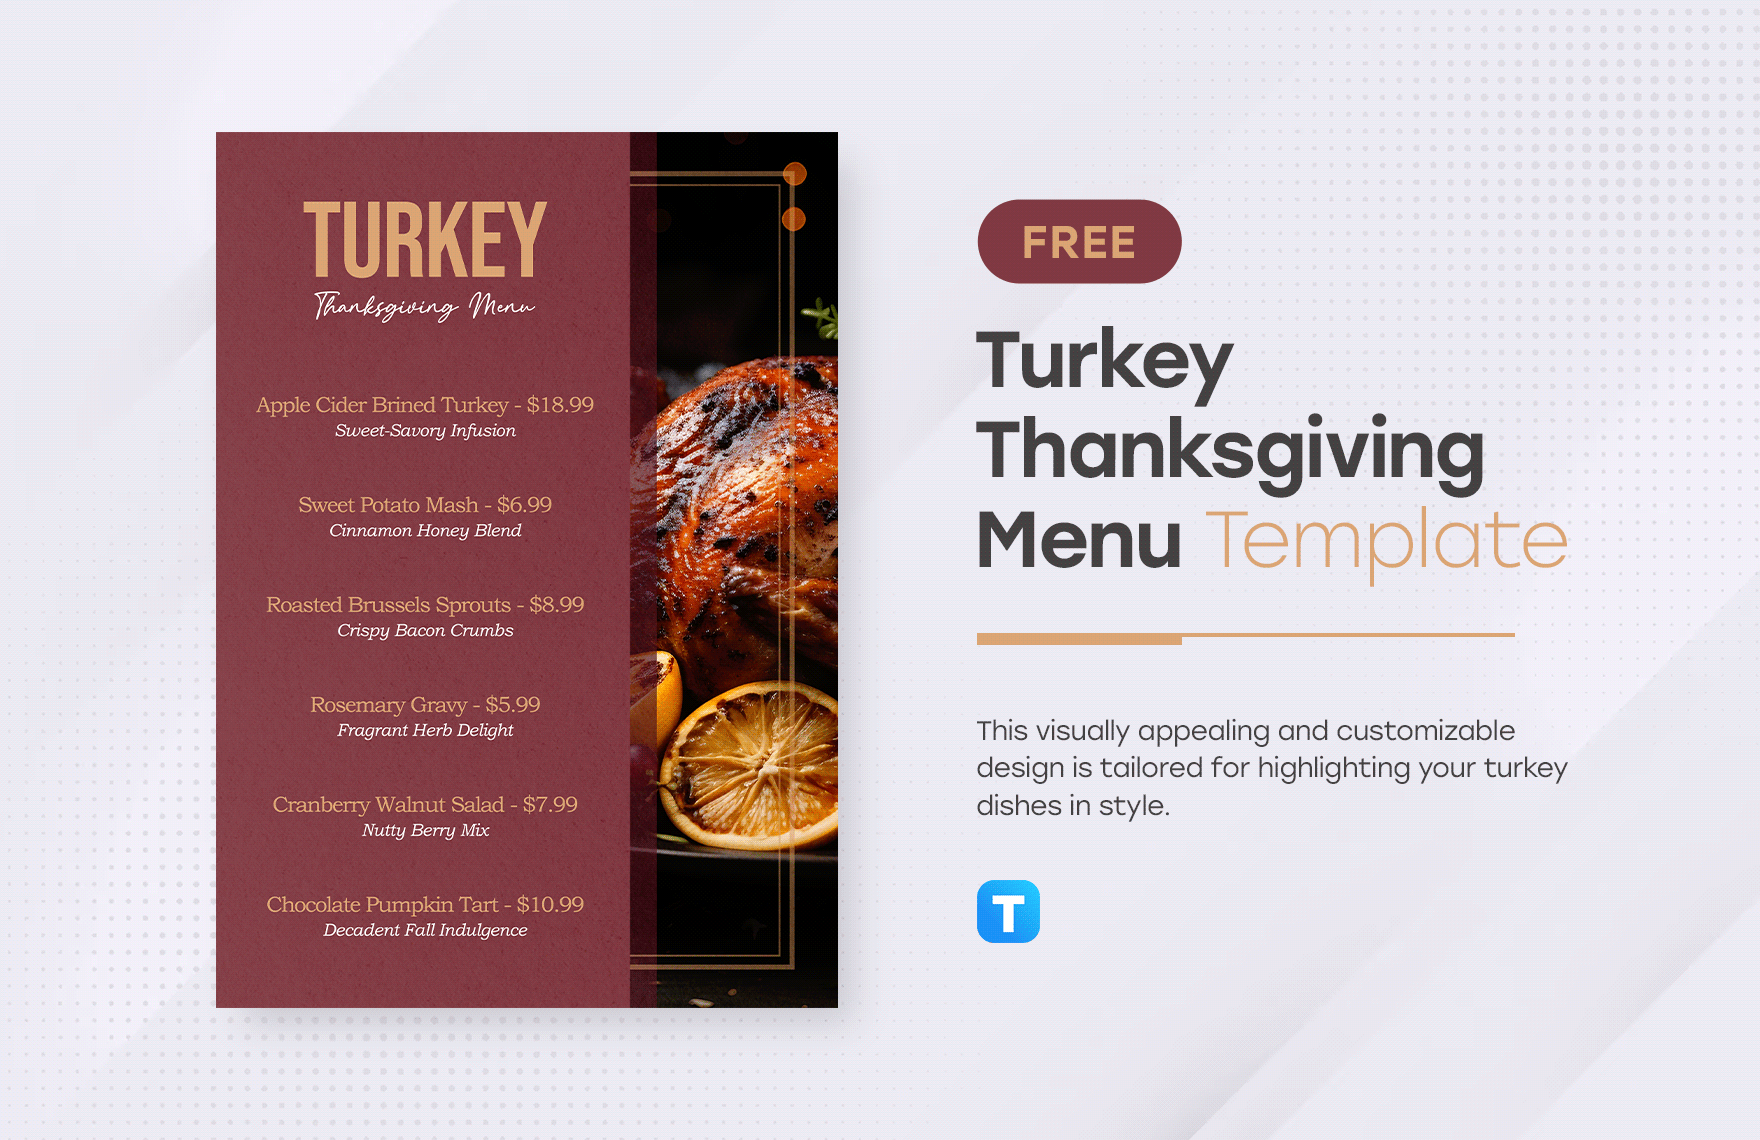 Turkey Thanksgiving Menu Template